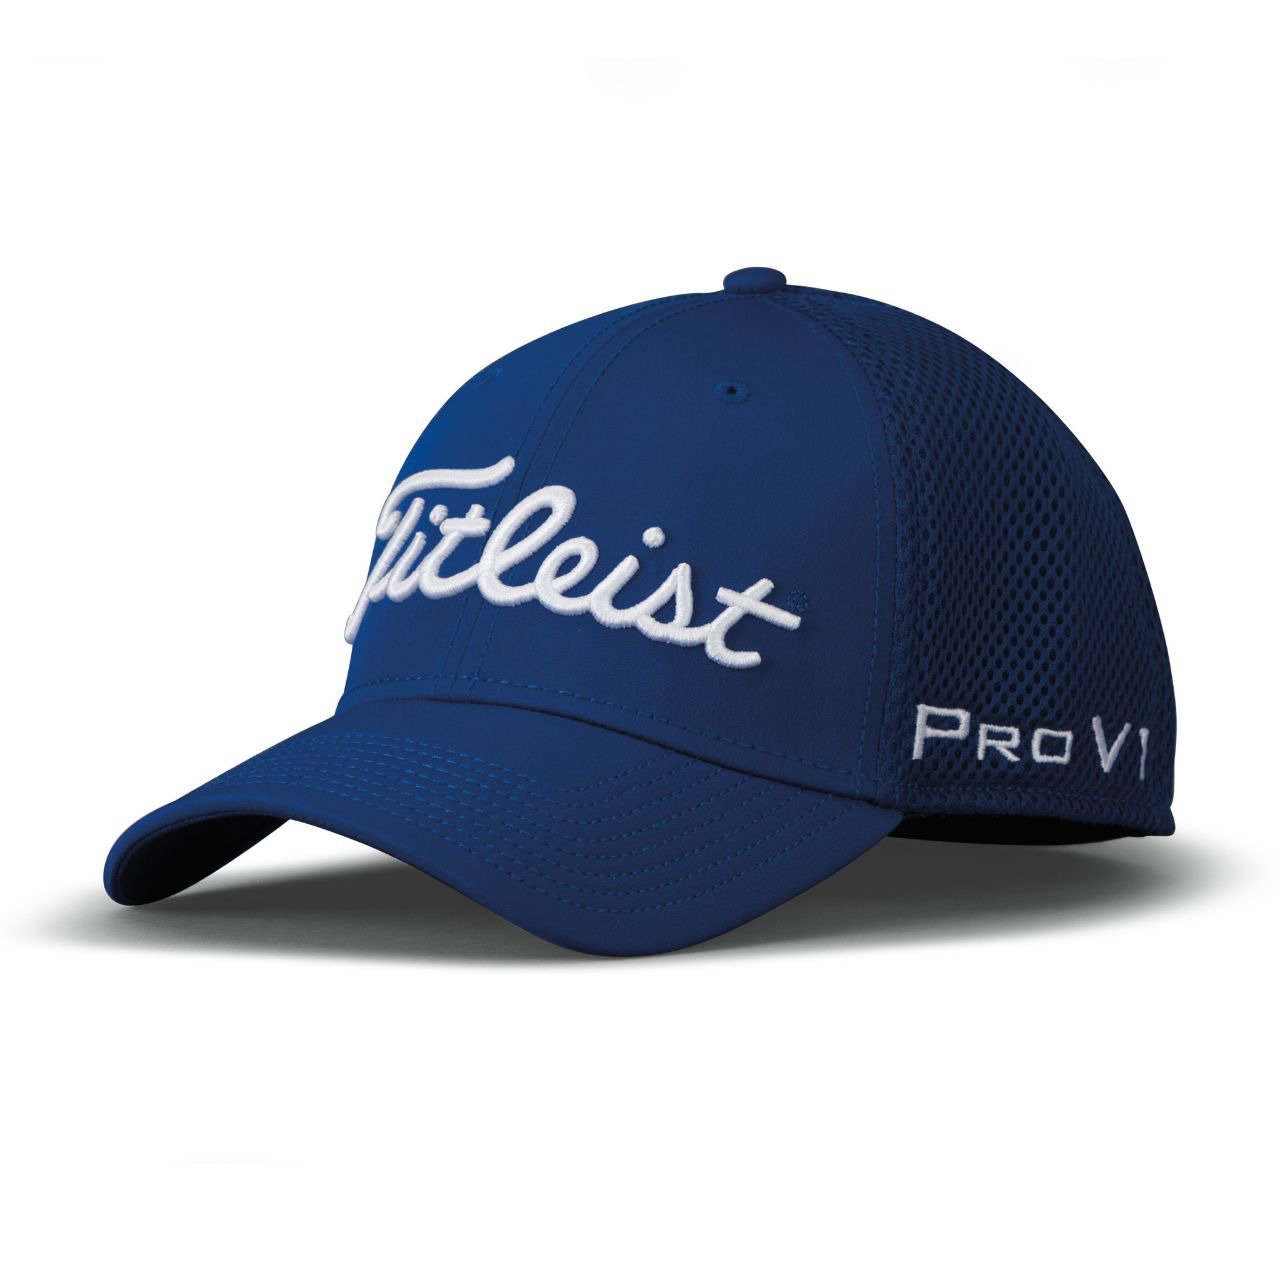 Golf Hats & Caps | Golf Bucket Hats, Golf Hats, Golf Caps | Academy